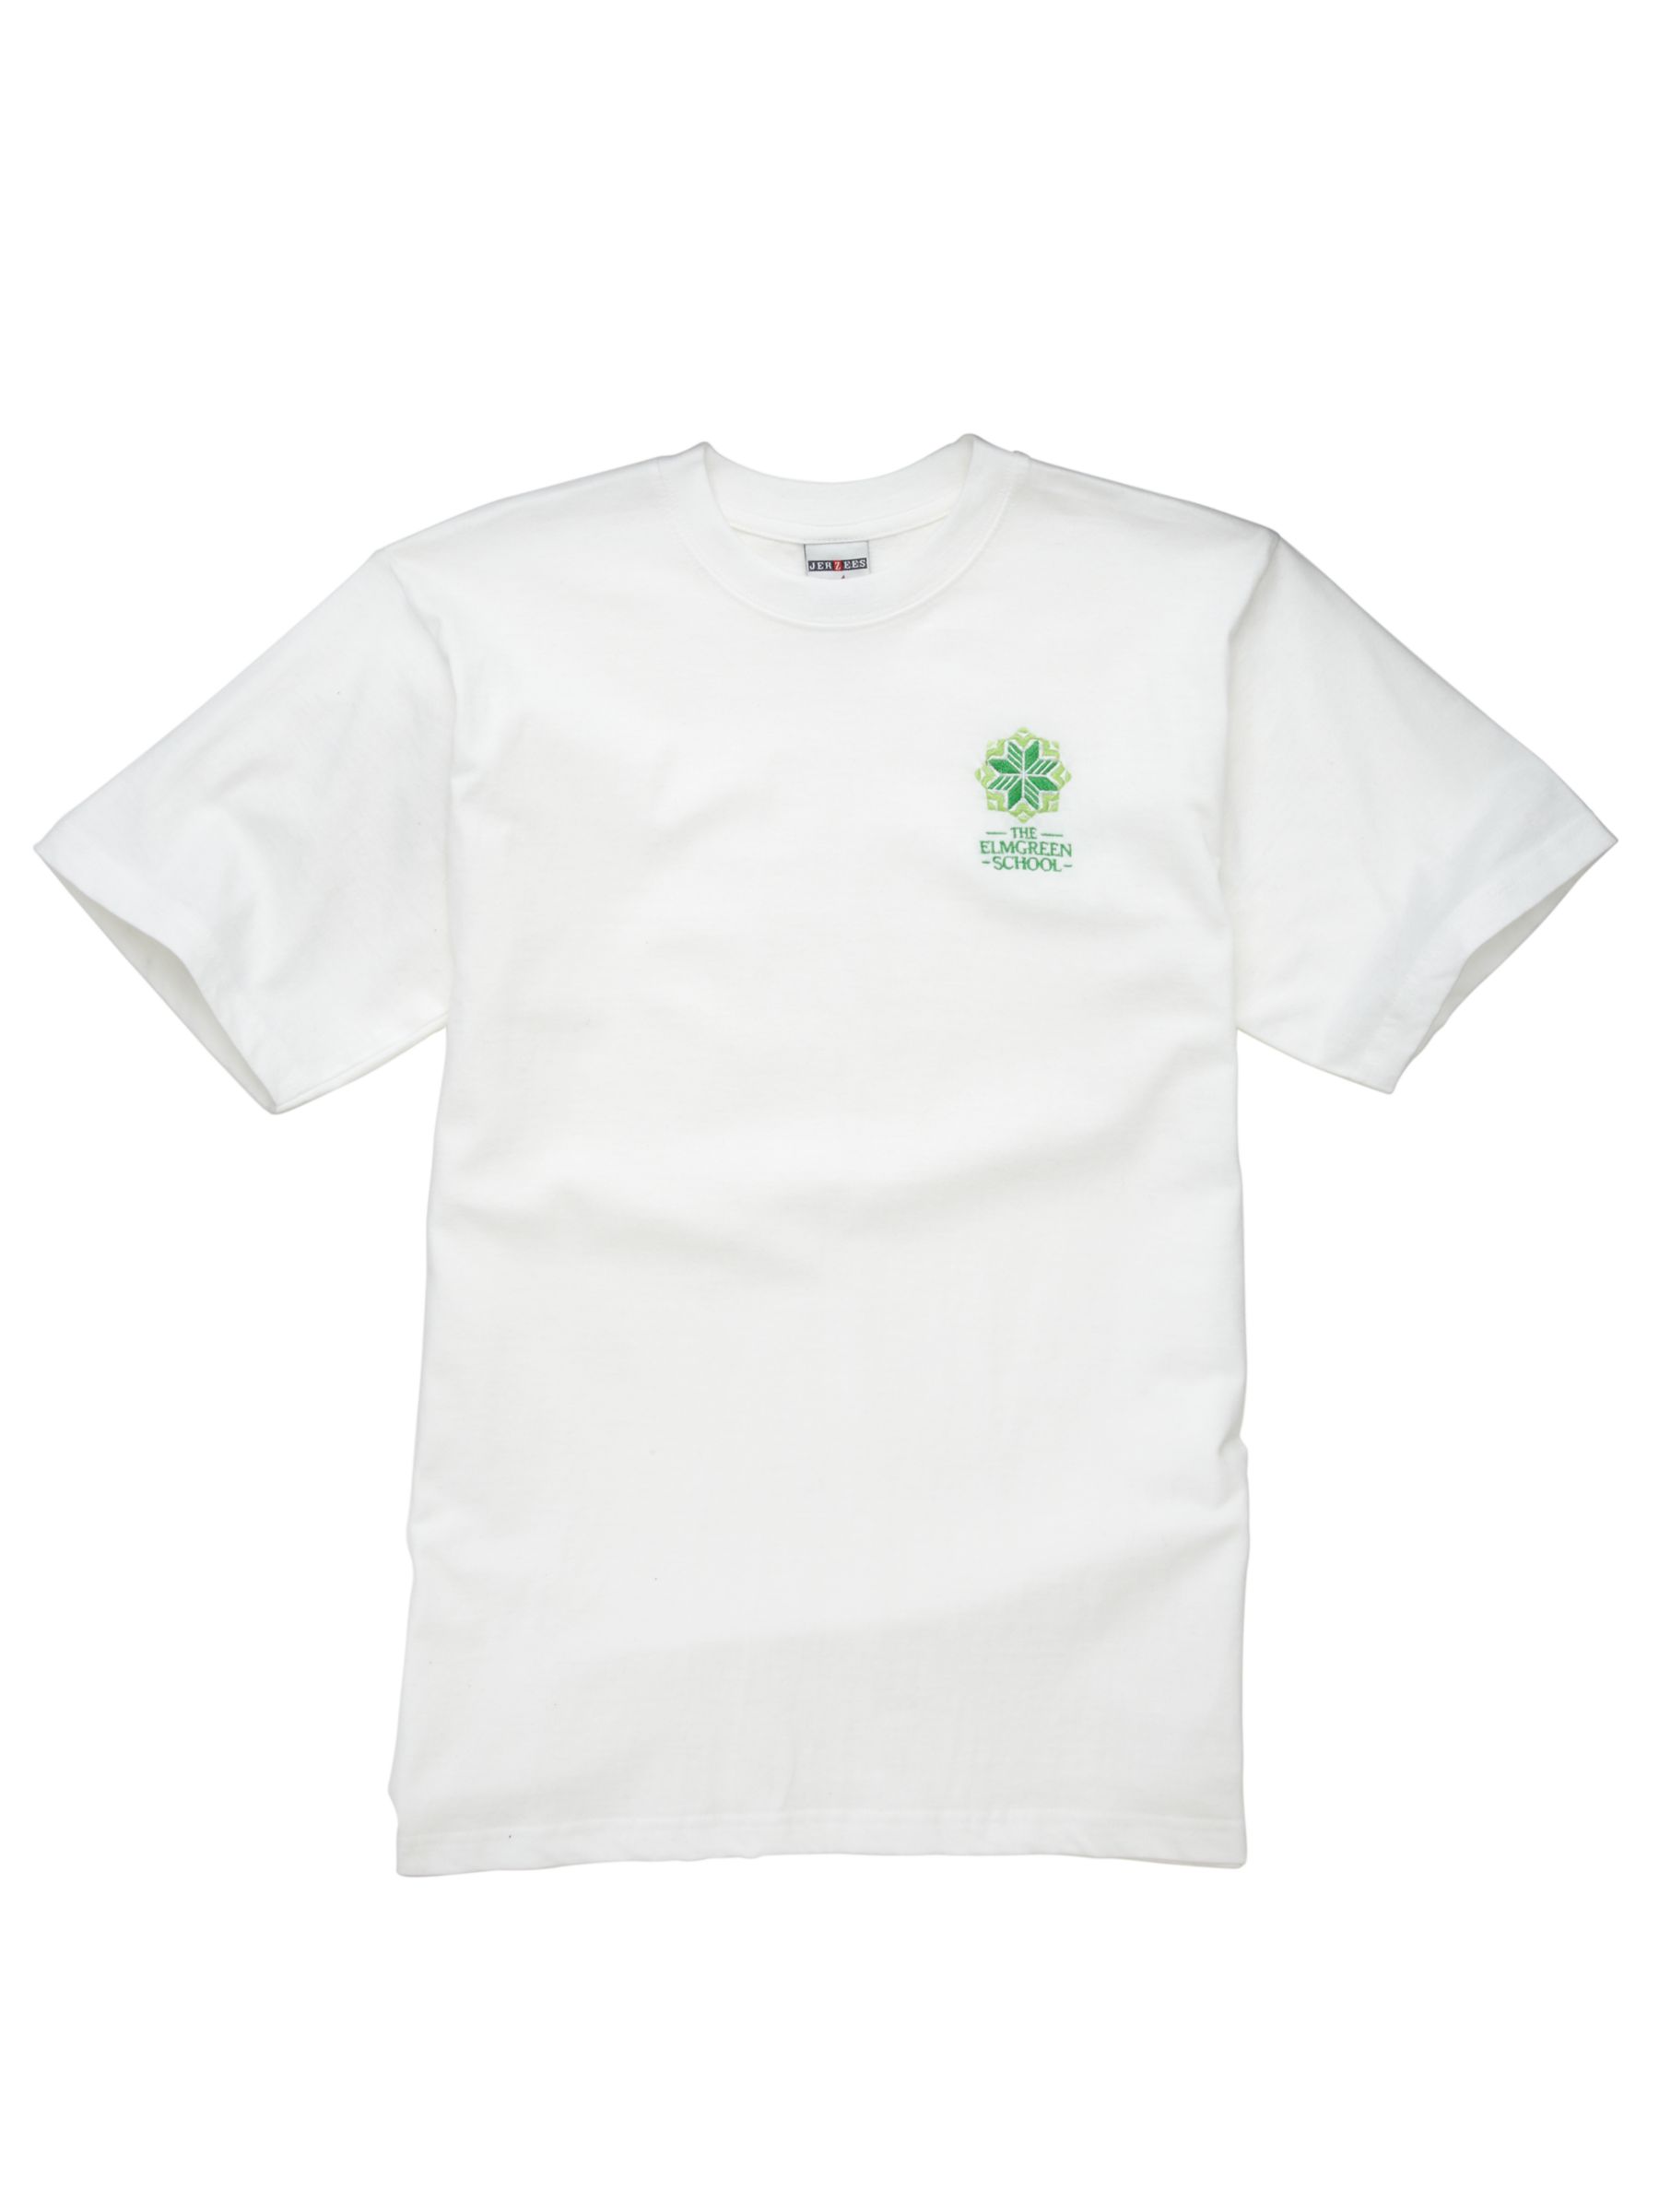 The Elmgreen School Unisex Sports T-Shirt, White